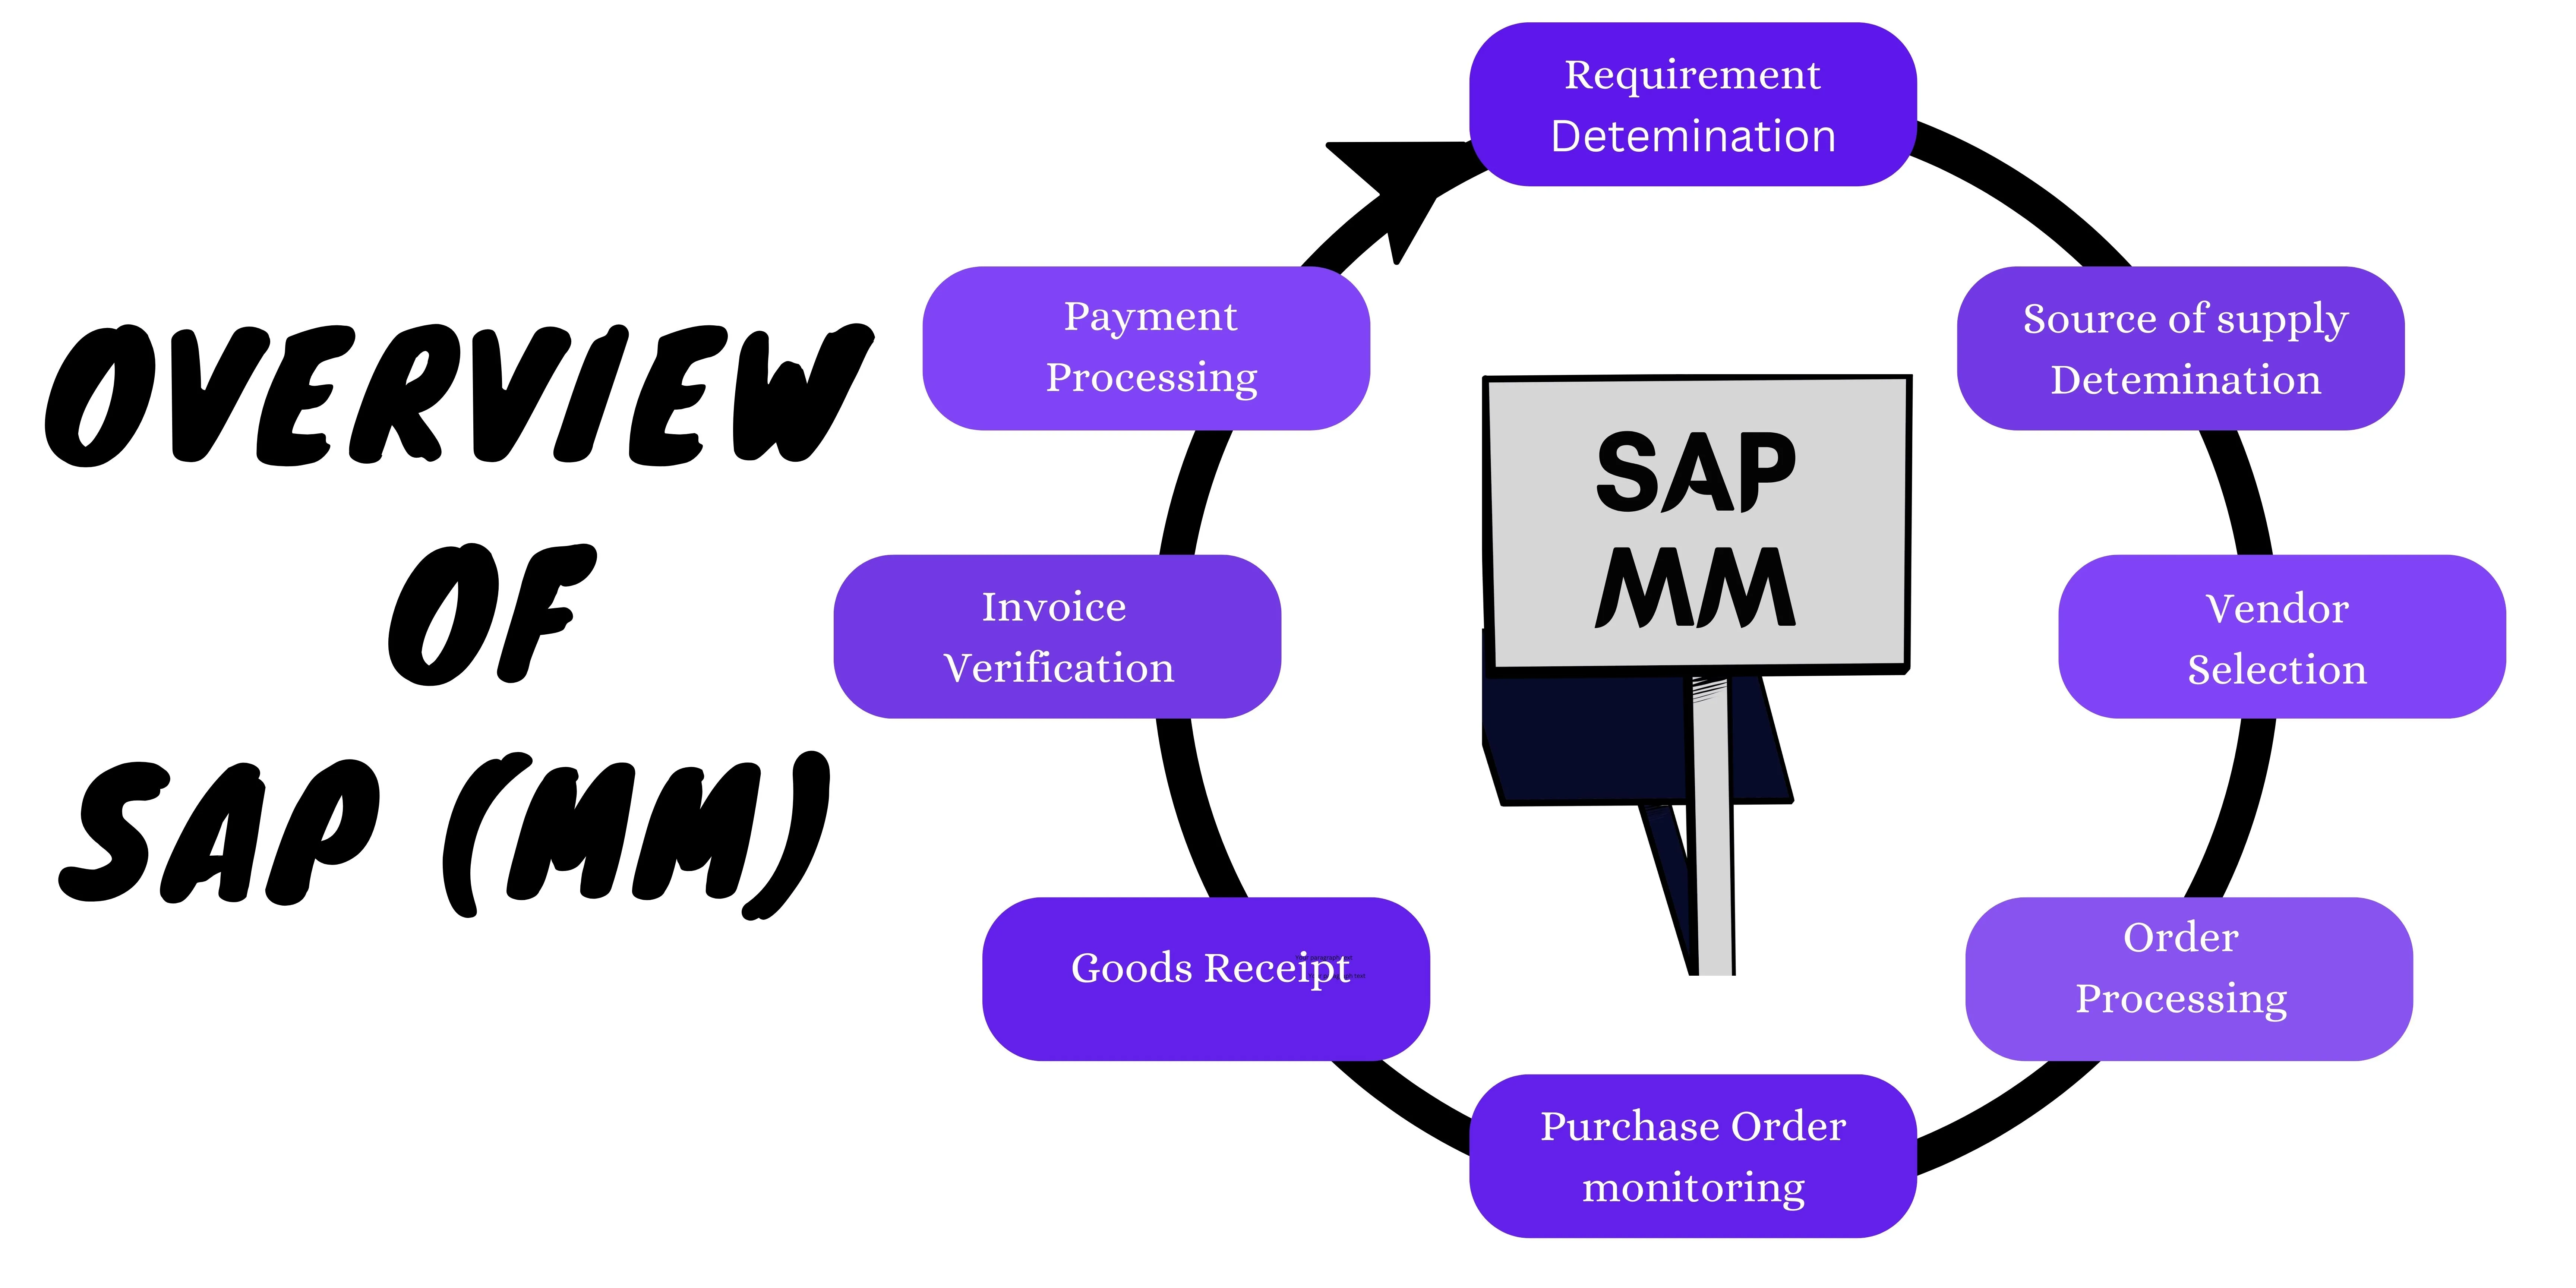 netweaver technovations, SAP MM, material management